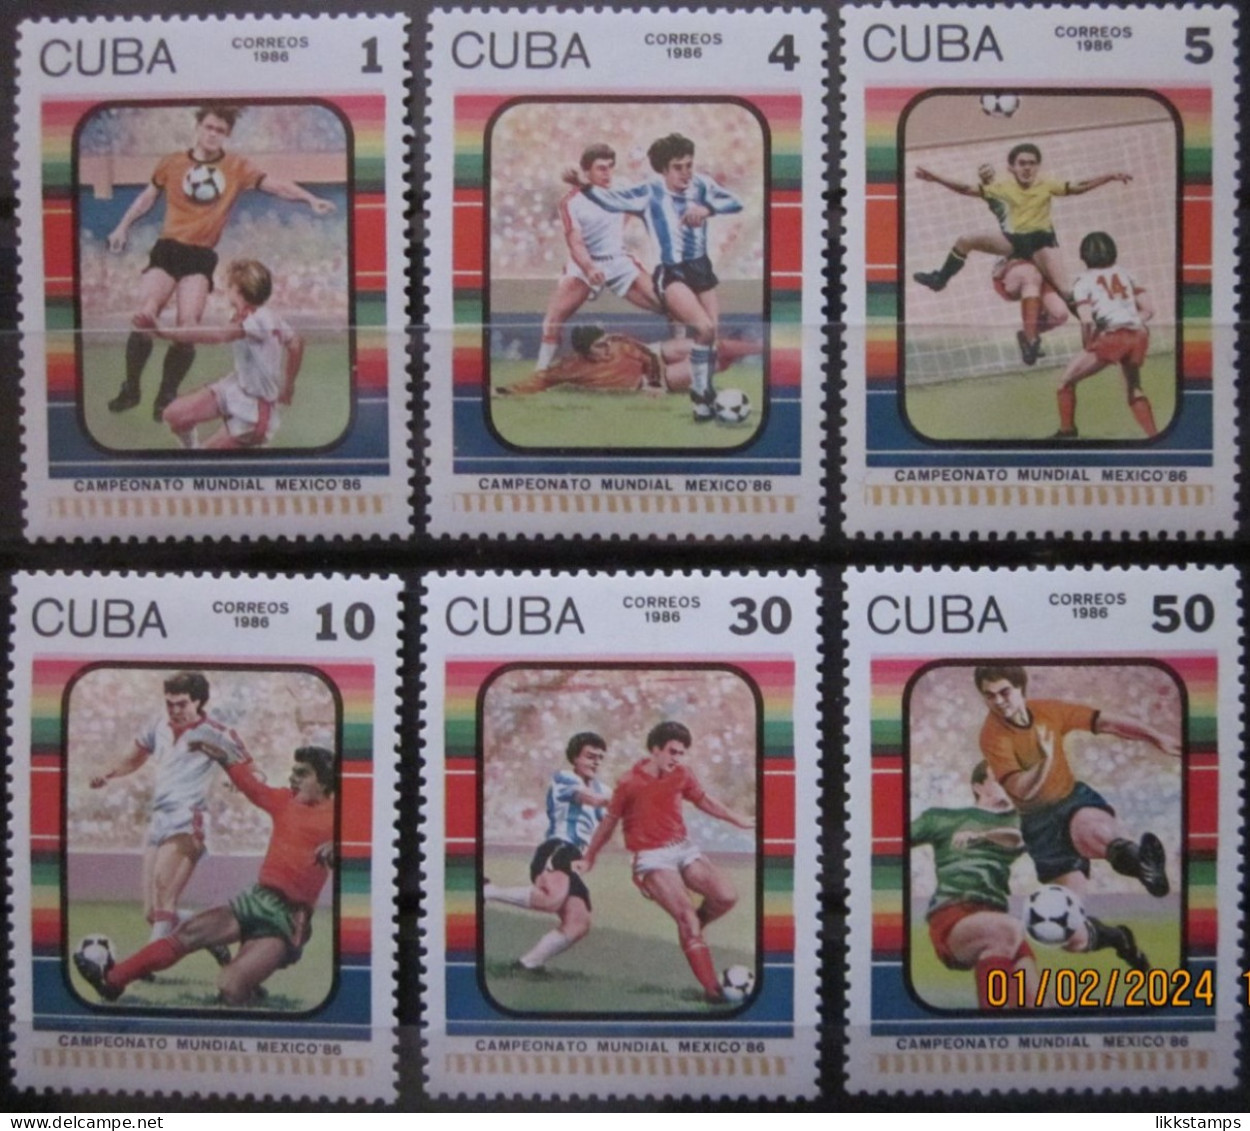 CUBA 1986 ~ S.G. 3135 - 3140 ~ WORLD CUP FOOTBALL CHAMPIONSHIP. ~  MNH #03134 - Nuevos